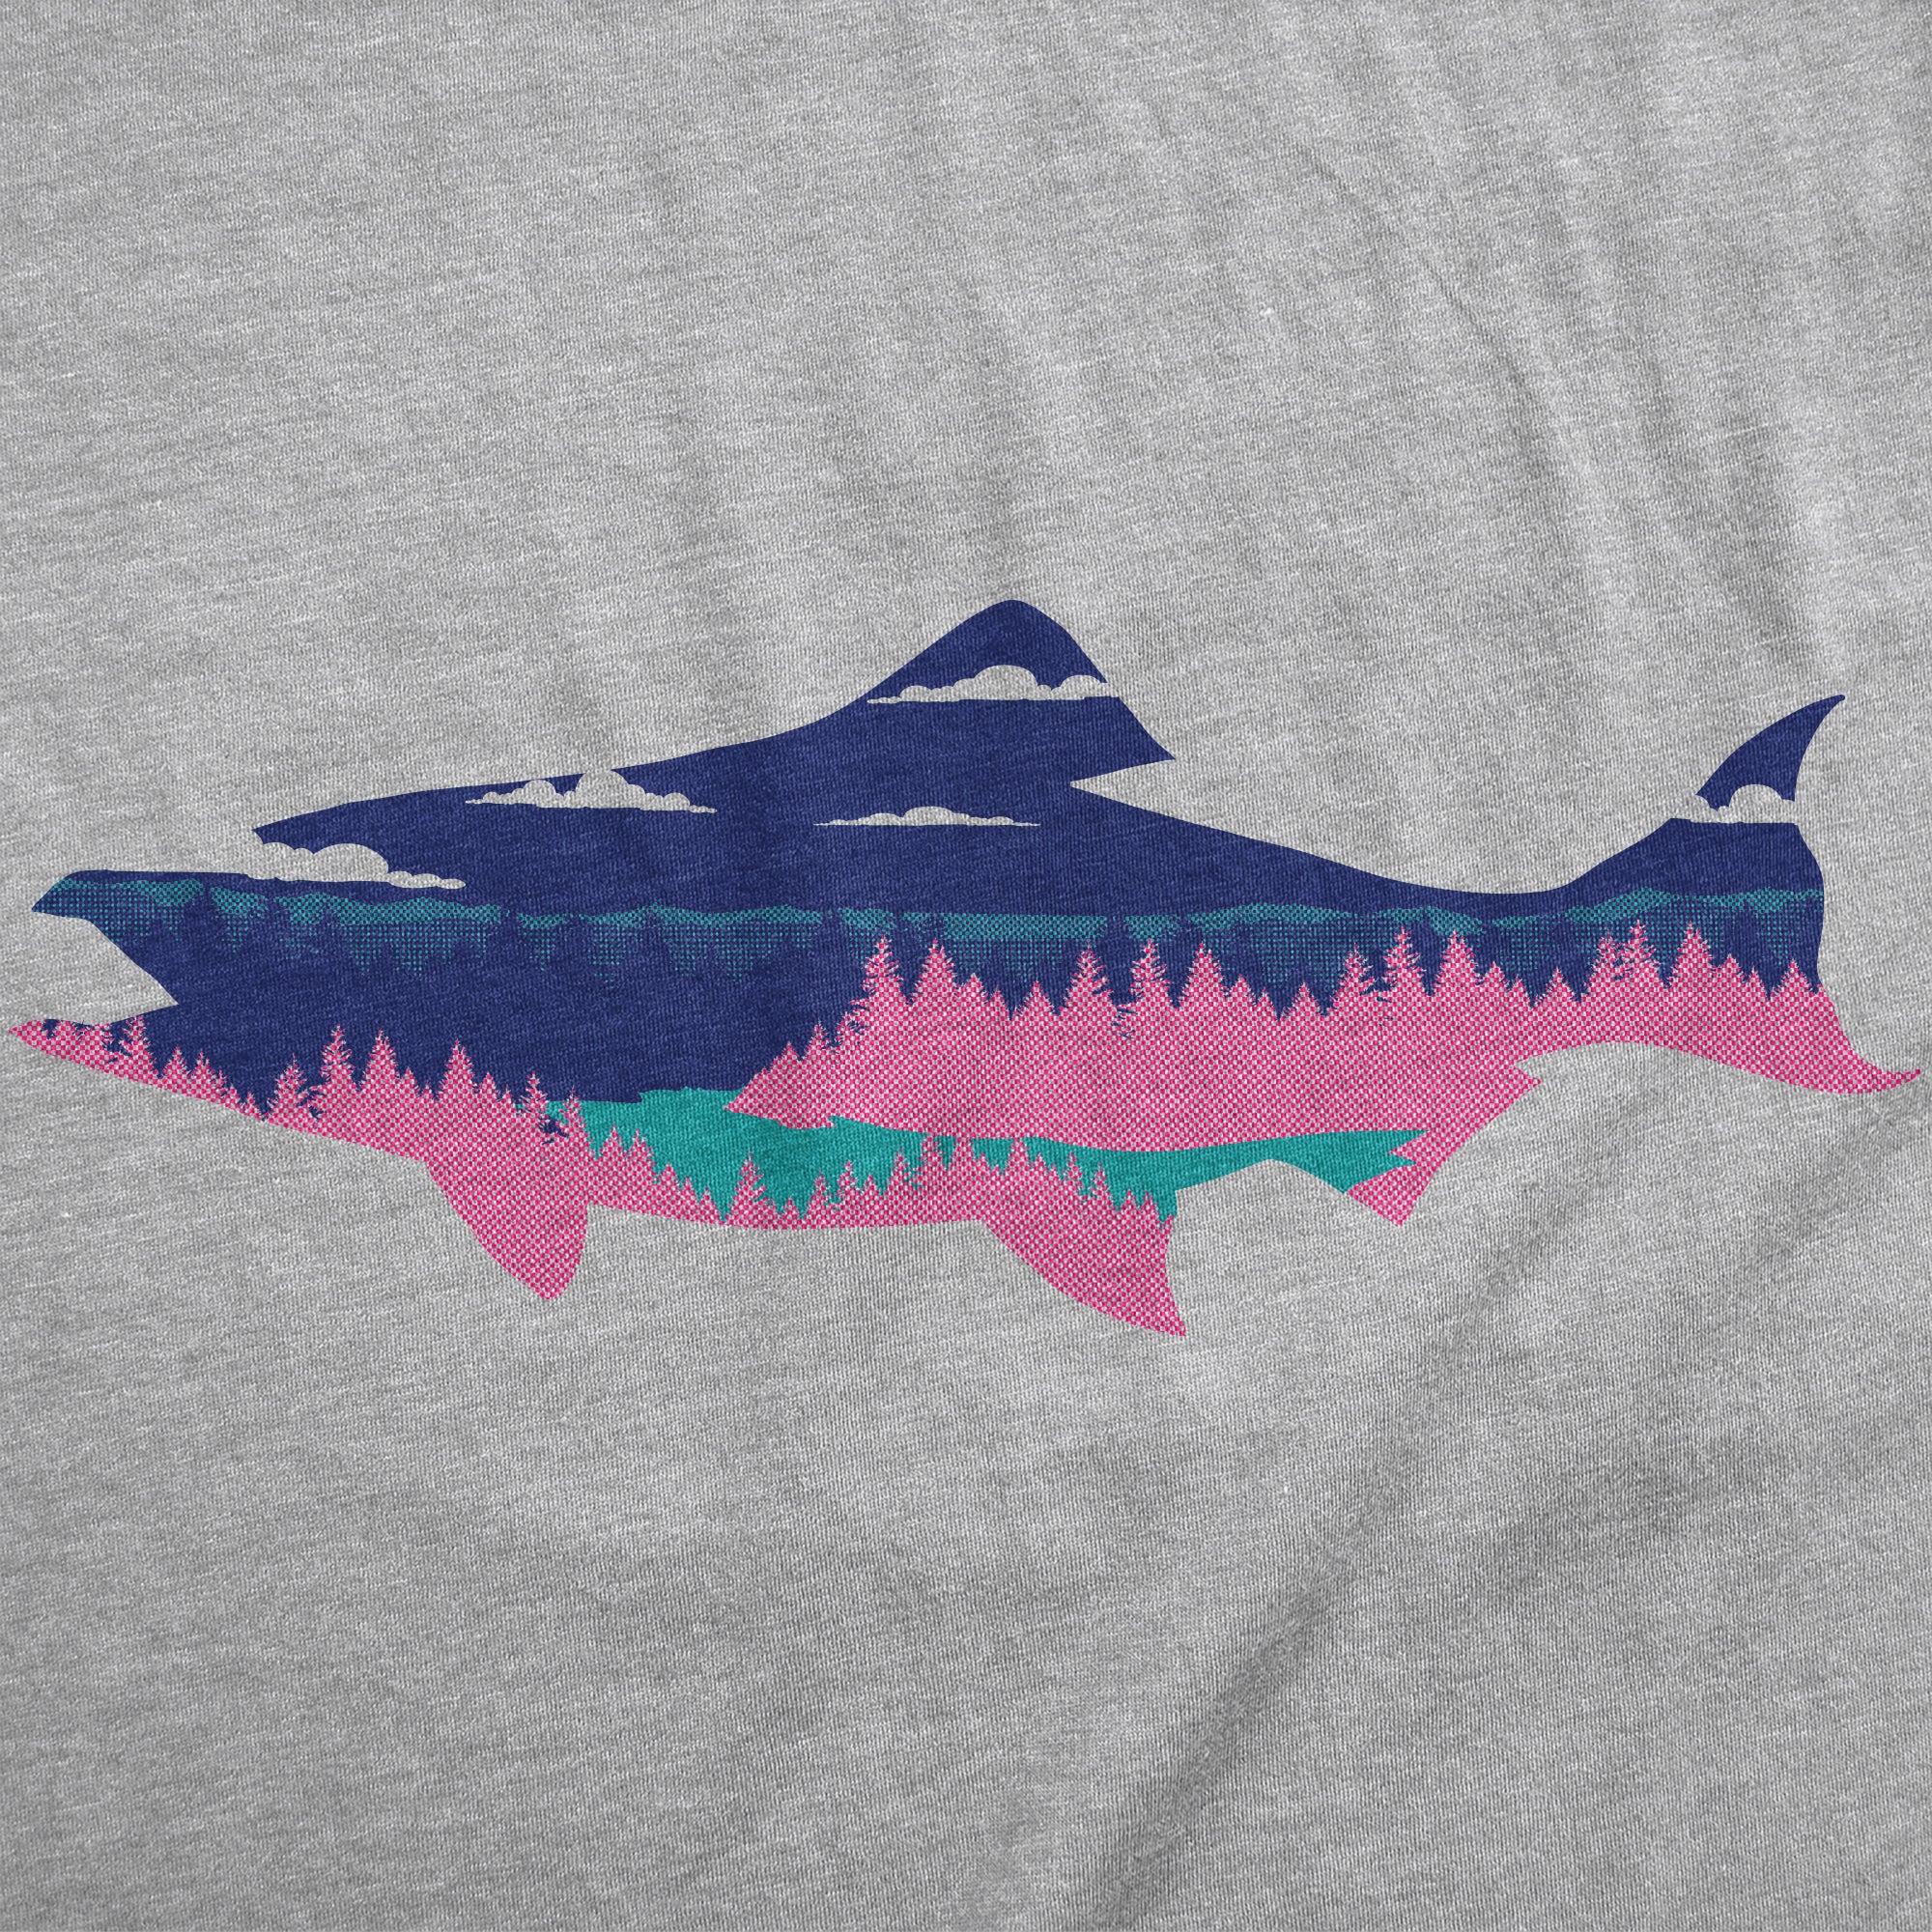 Funny Light Heather Grey - Salmon Landscape Salmon Landscape Mens T Shirt Nerdy Fishing Tee